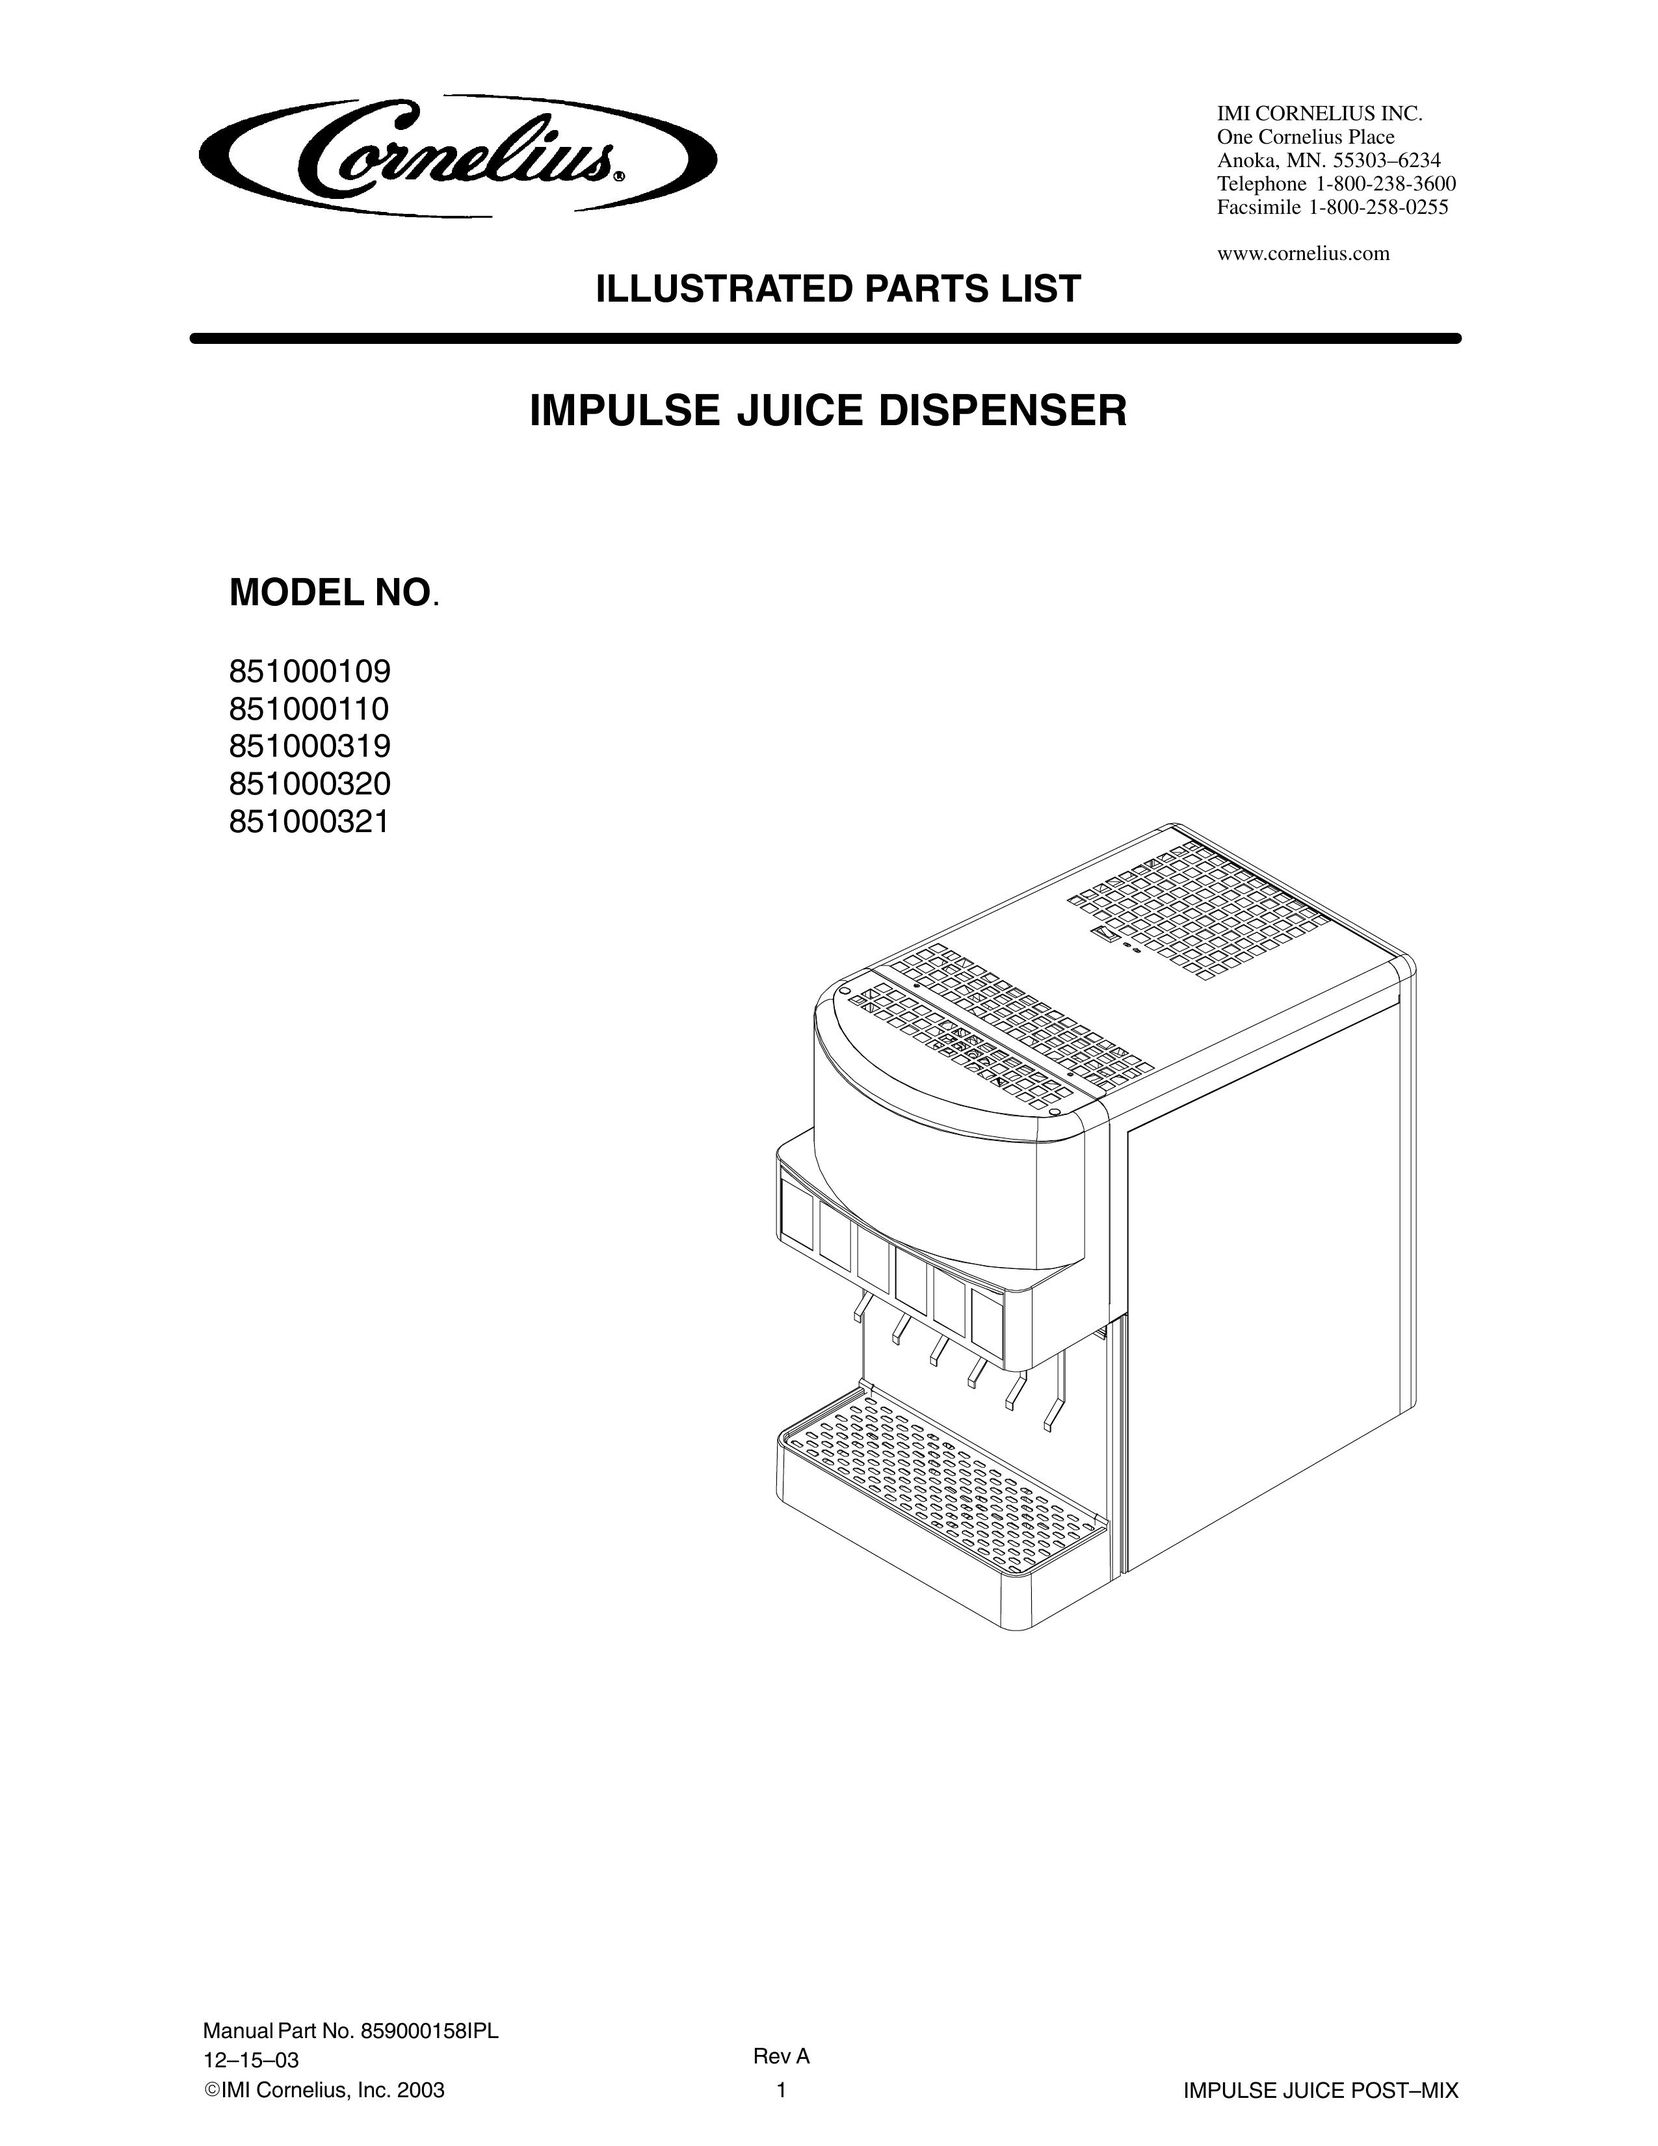 Panasonic 851000319 Juicer User Manual